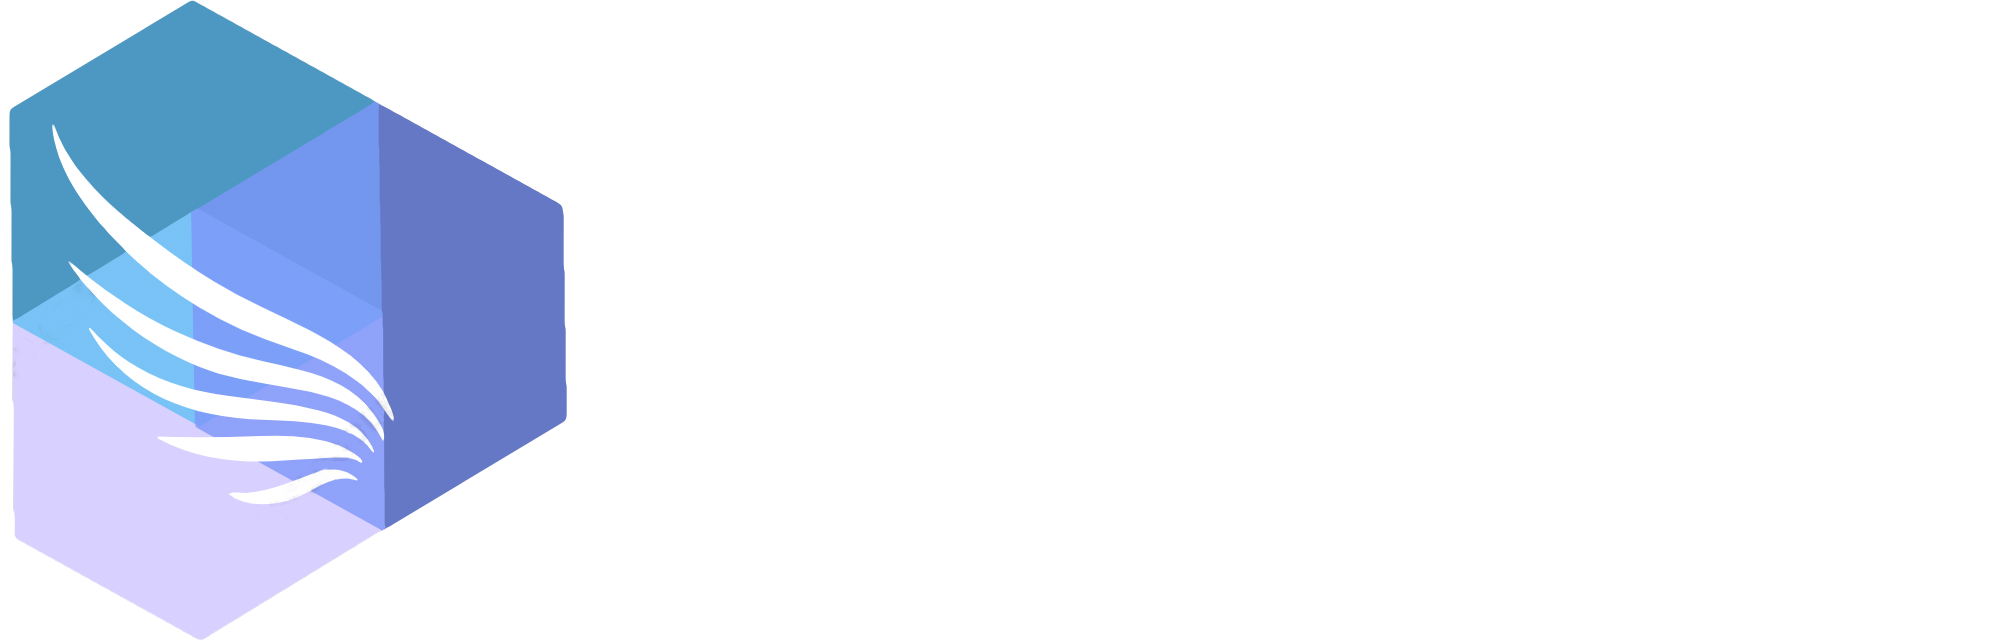 Angels Partners Logo White